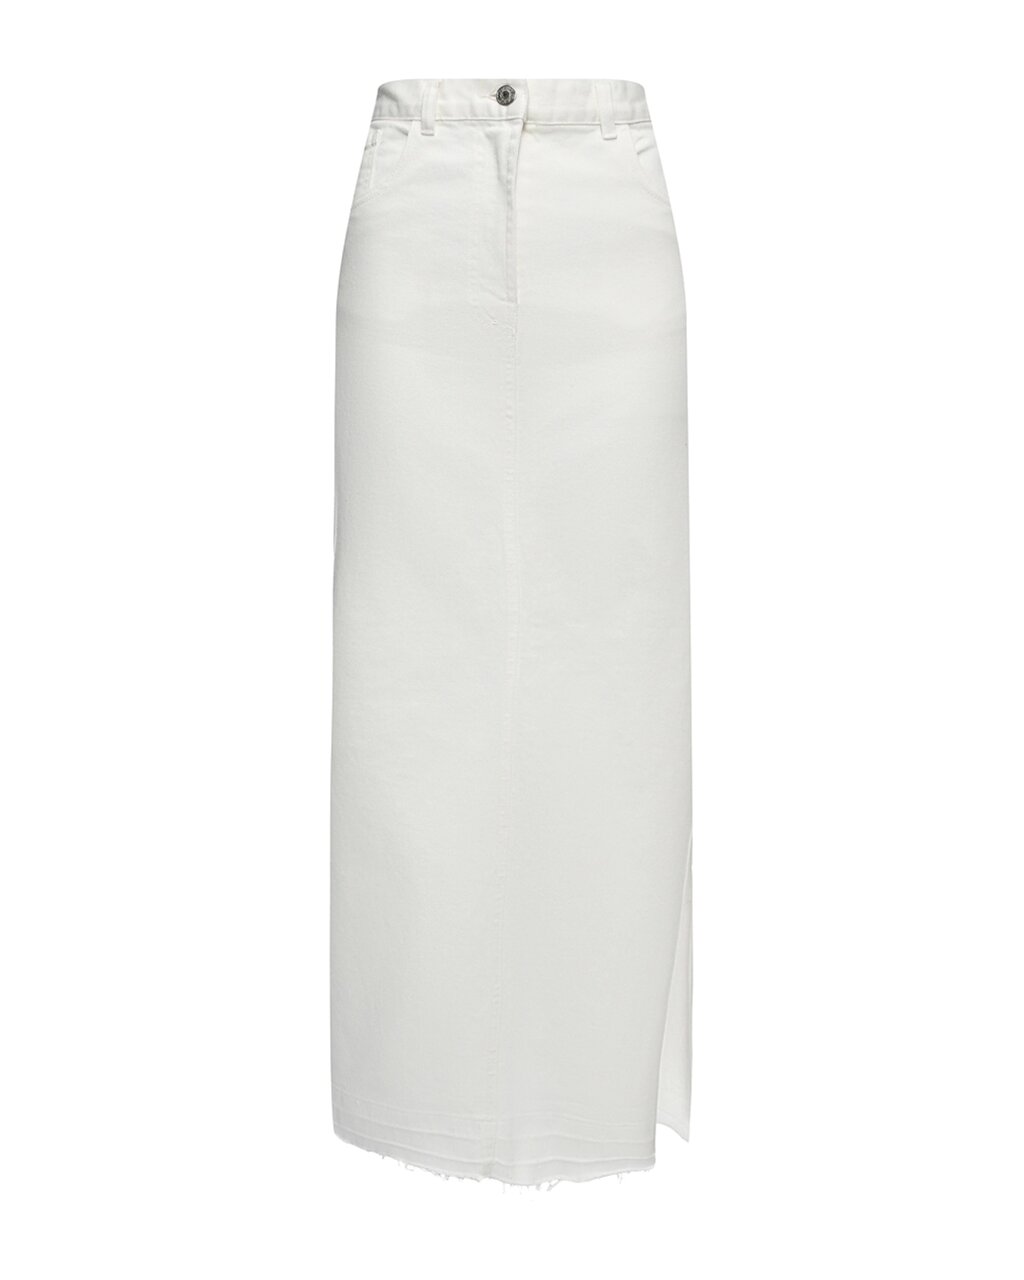 Юбка с разрезом, белая Forte dei Marmi Couture от компании Admi - фото 1